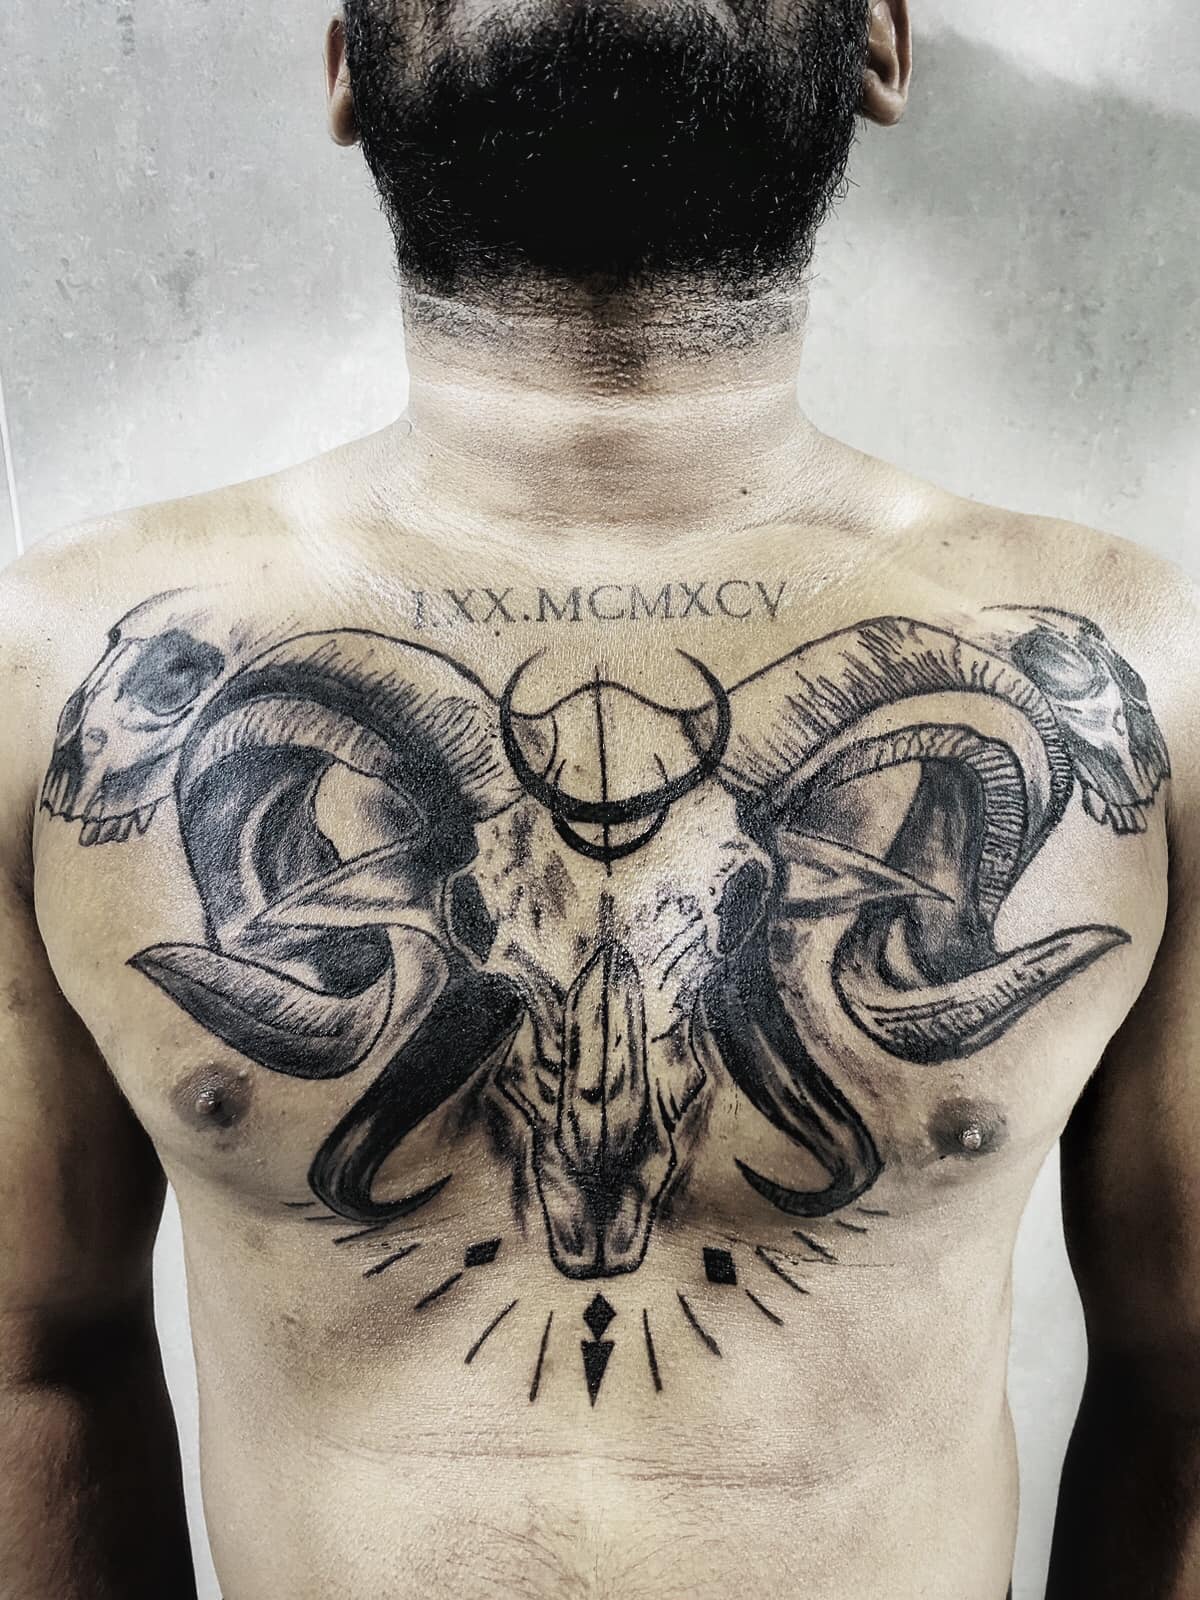 PHOTOS: Dark Arts Tattoo – Daily Freeman